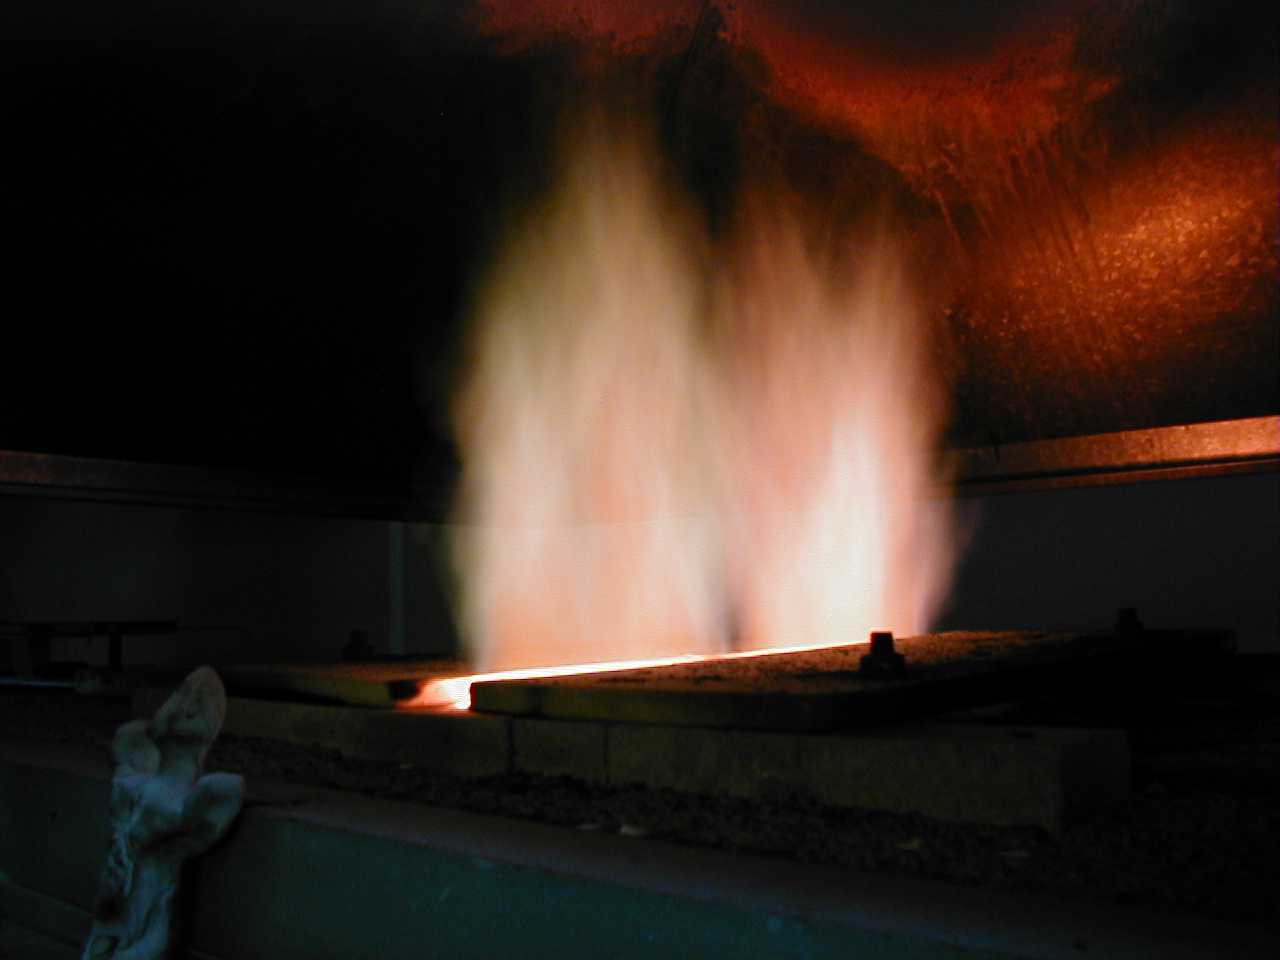 flamage from my kiln